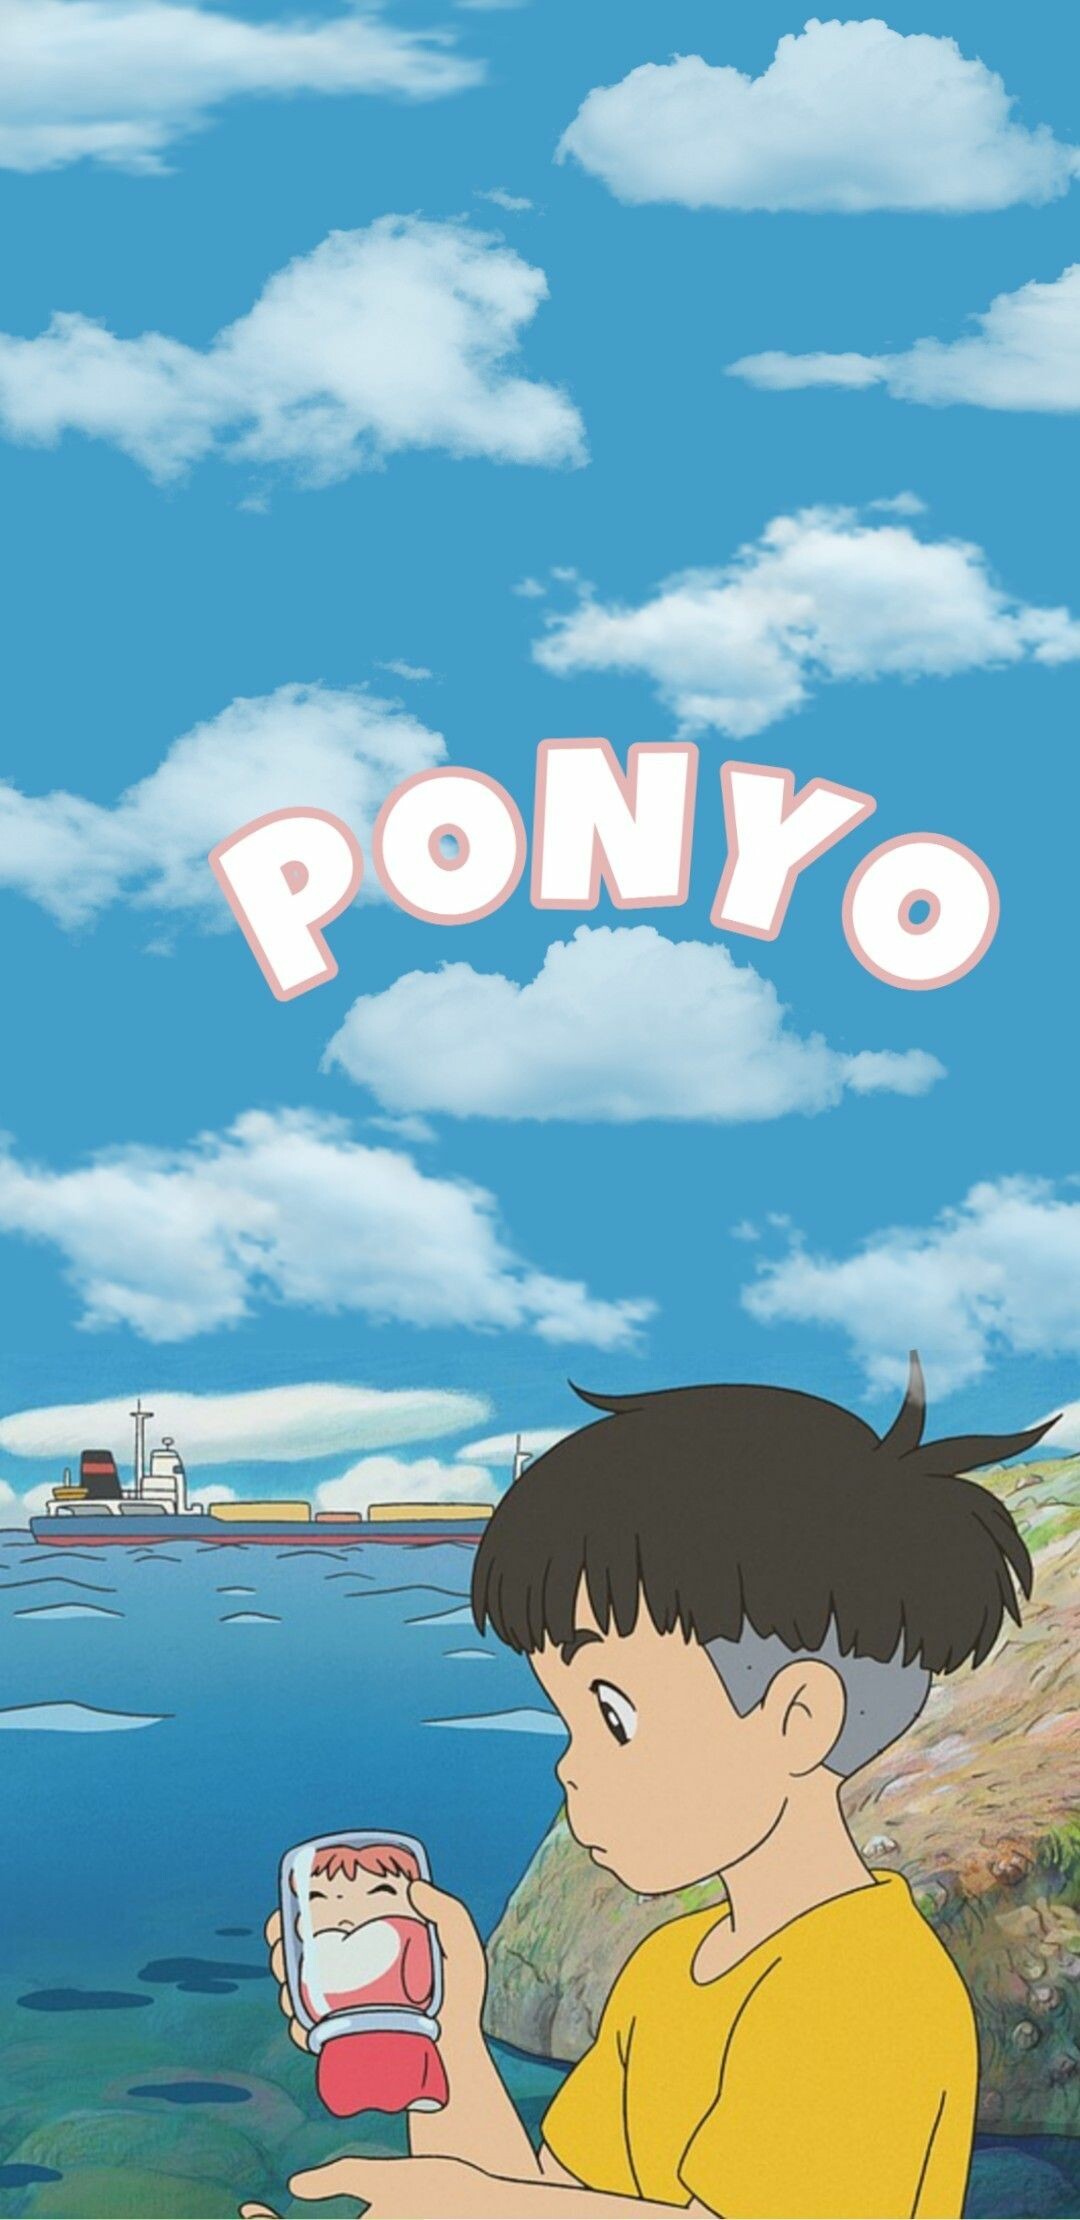 HD wallpaper, Iphone Background, Anime Wallpaper, Iphone Hd Ponyo Wallpaper Image, Ghibli Artwork, Ponyo, 1080X2220 Hd Phone